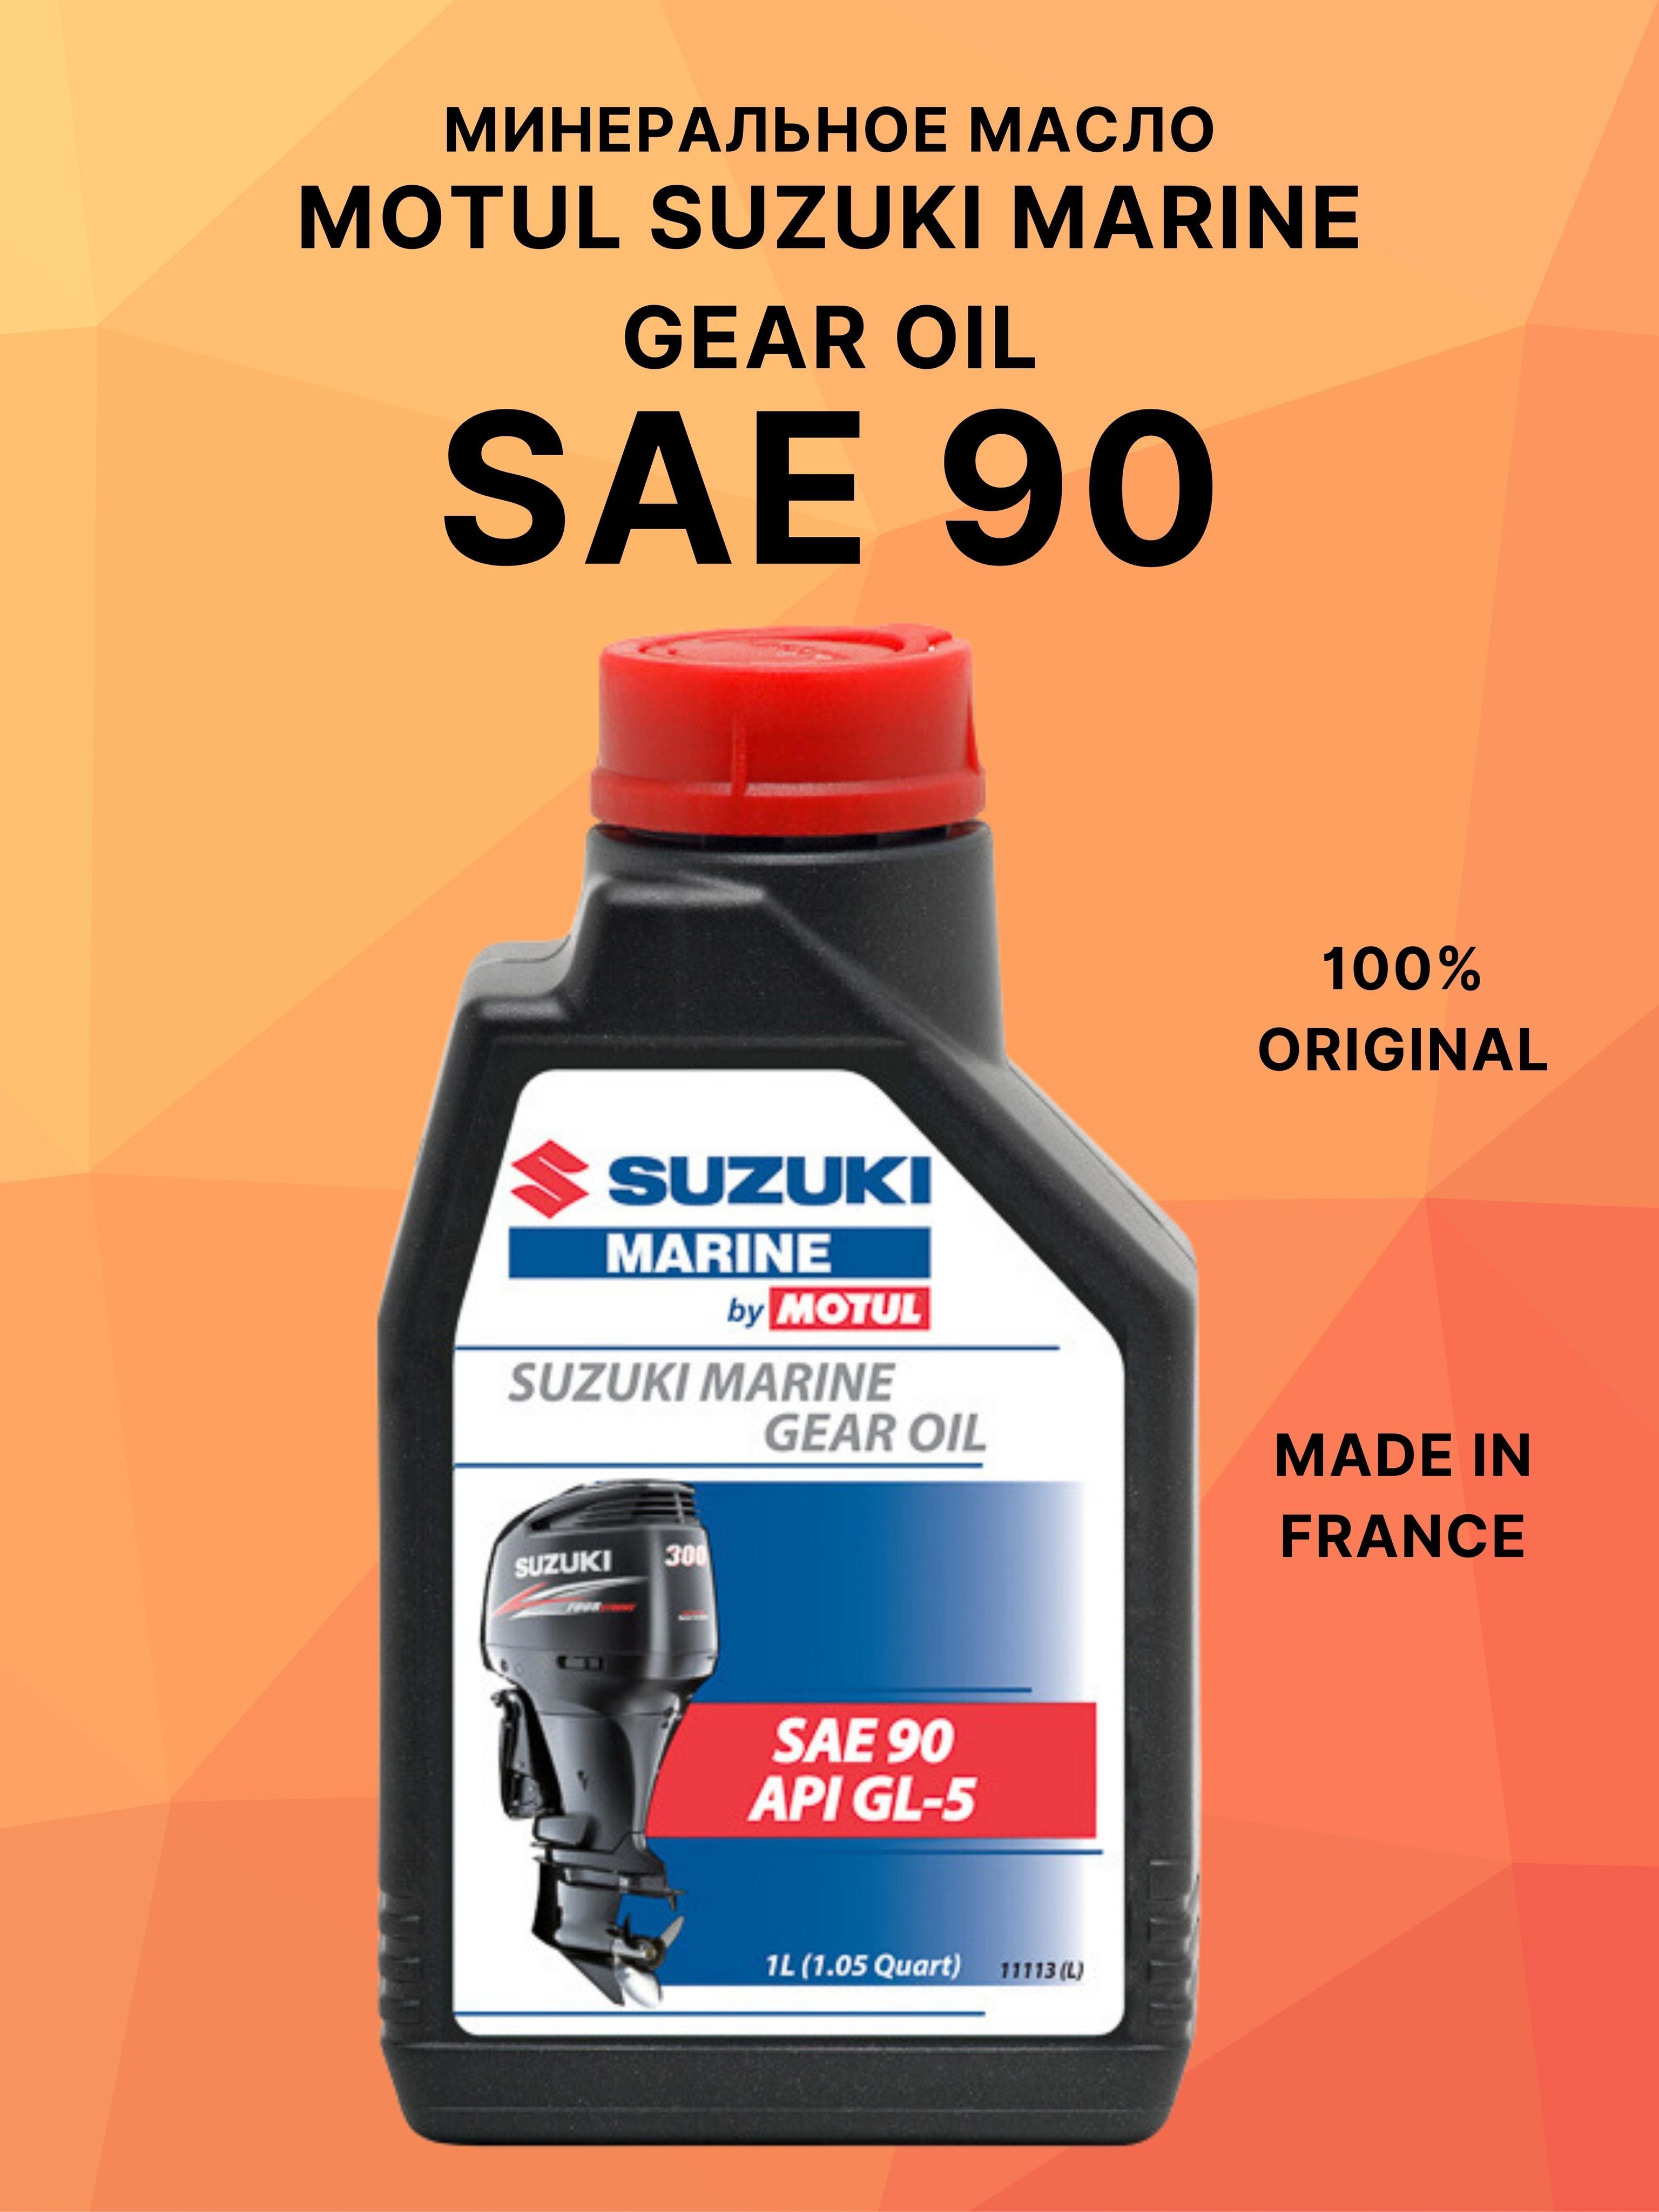 ) 4t Motul Suzuki Marine 10w-30 API-SL. Трансмиссионное масло для лодочного мотора Genuine Gear Oil API gl 5 SAE 80-90 370мл. Масло Motul Suzuki Marine Gear Oil SAE 90 1л., 108879 (021-115).